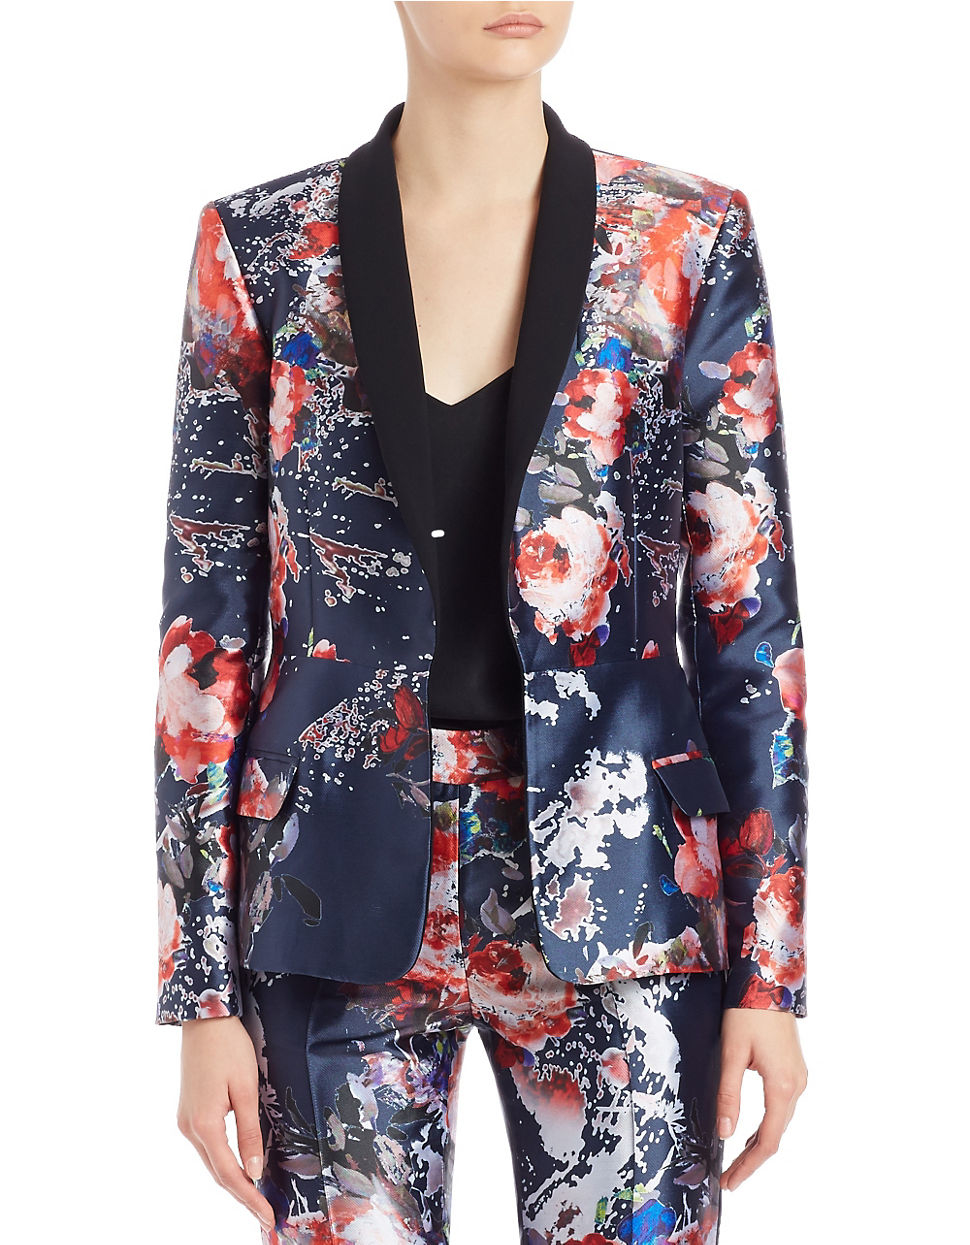 Lyst - Sachin & Babi Sheen Floral-print Tuxedo Jacket in Blue